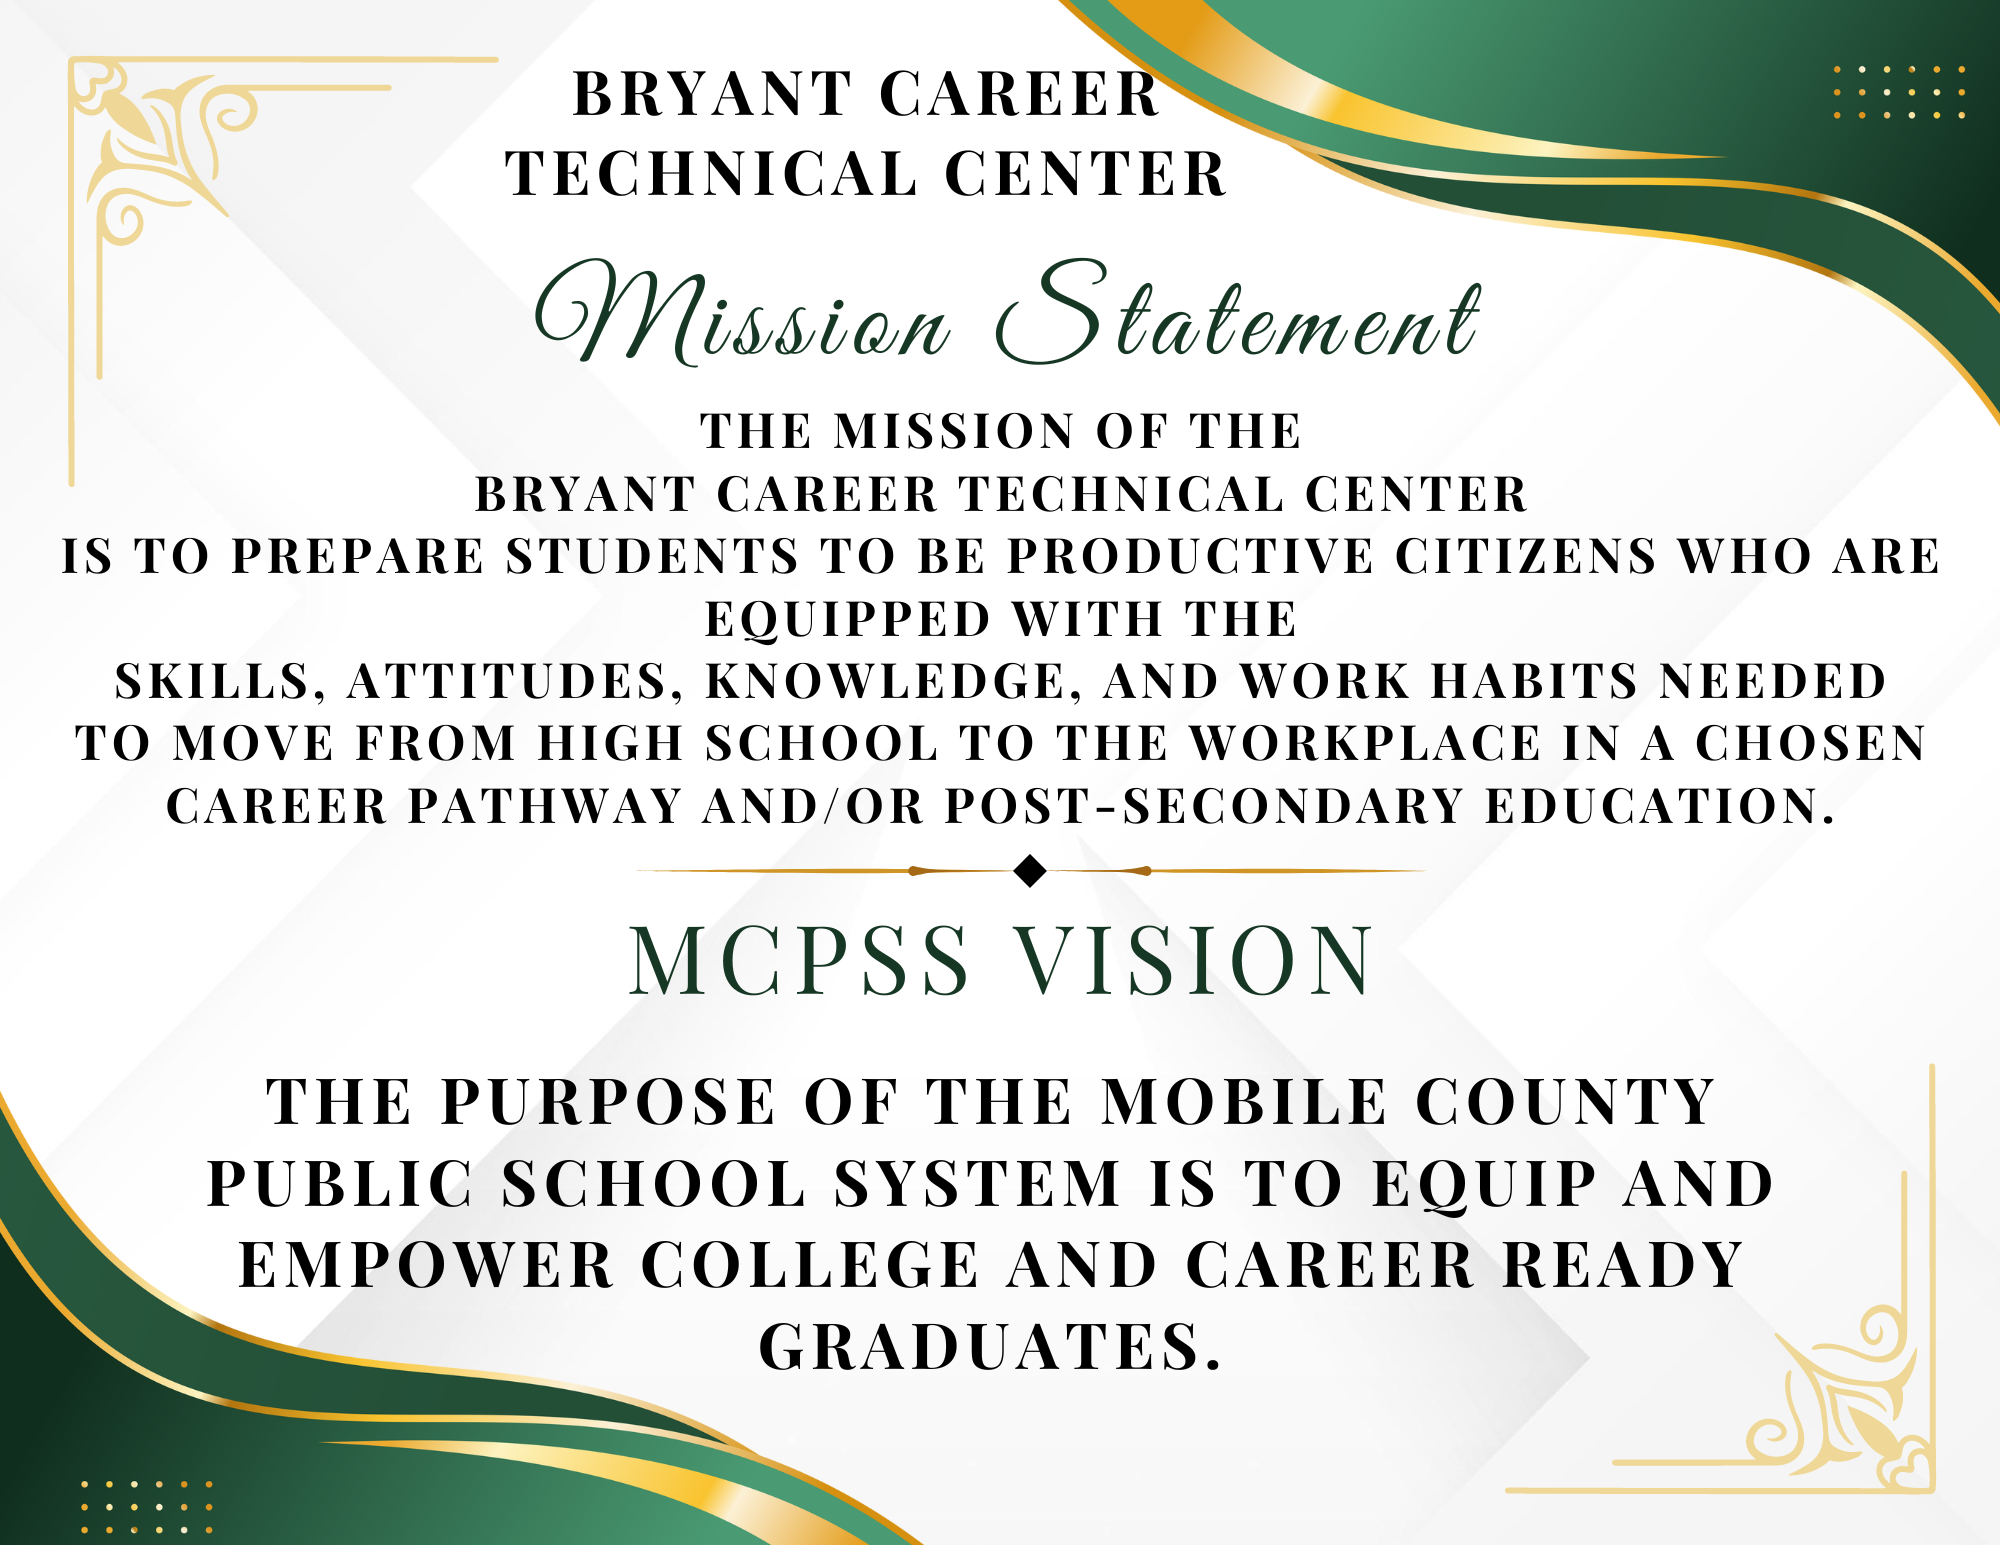 Bryant CTC Mission Statement/MCPSS Vision